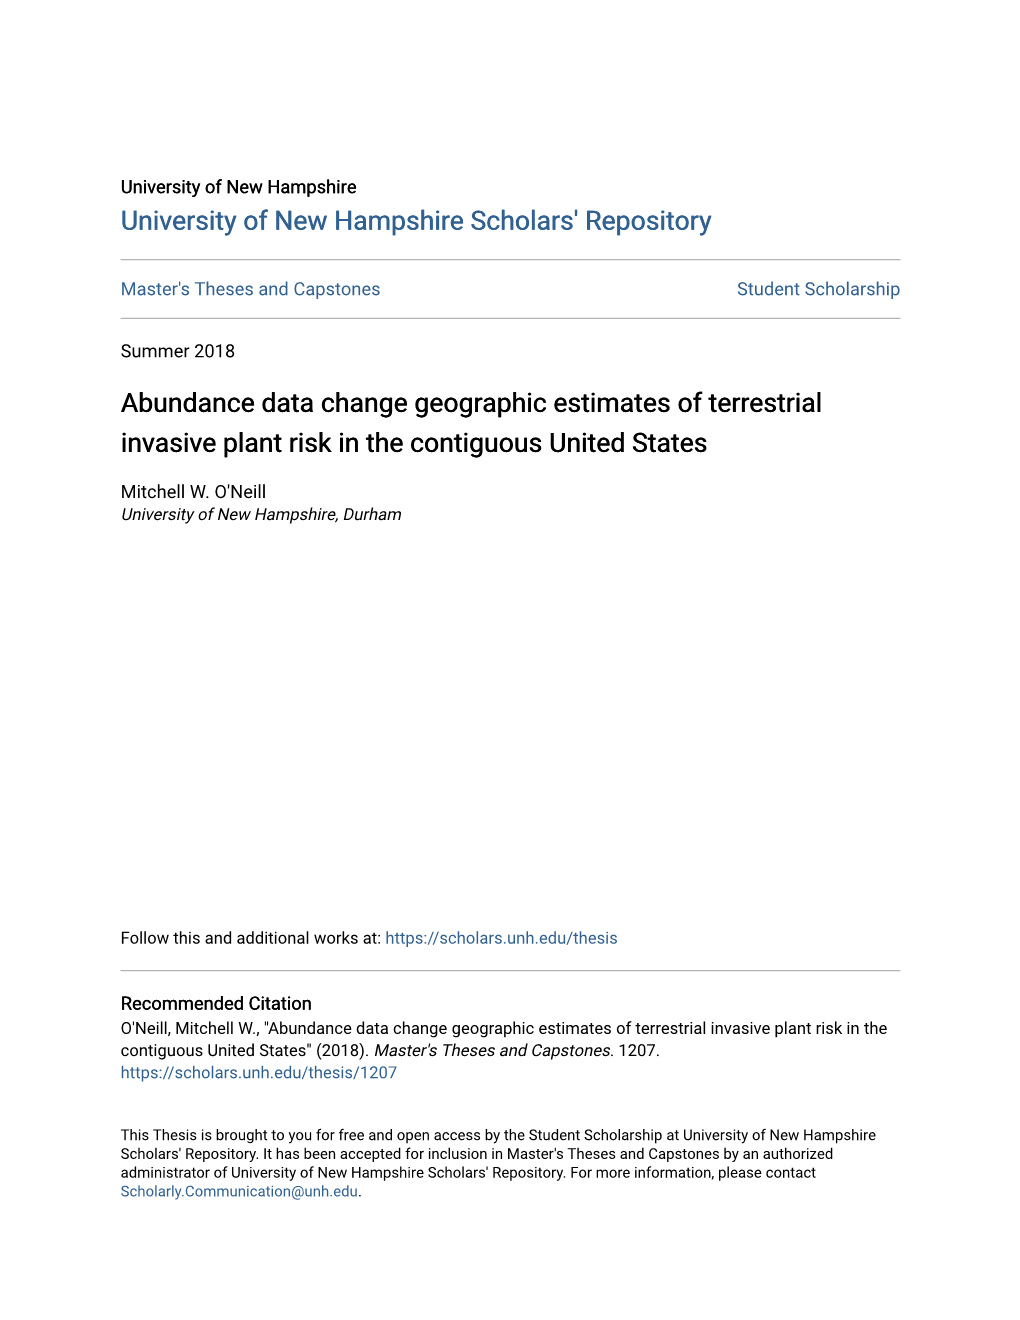 Abundance Data Change Geographic Estimates of Terrestrial Invasive Plant Risk in the Contiguous United States